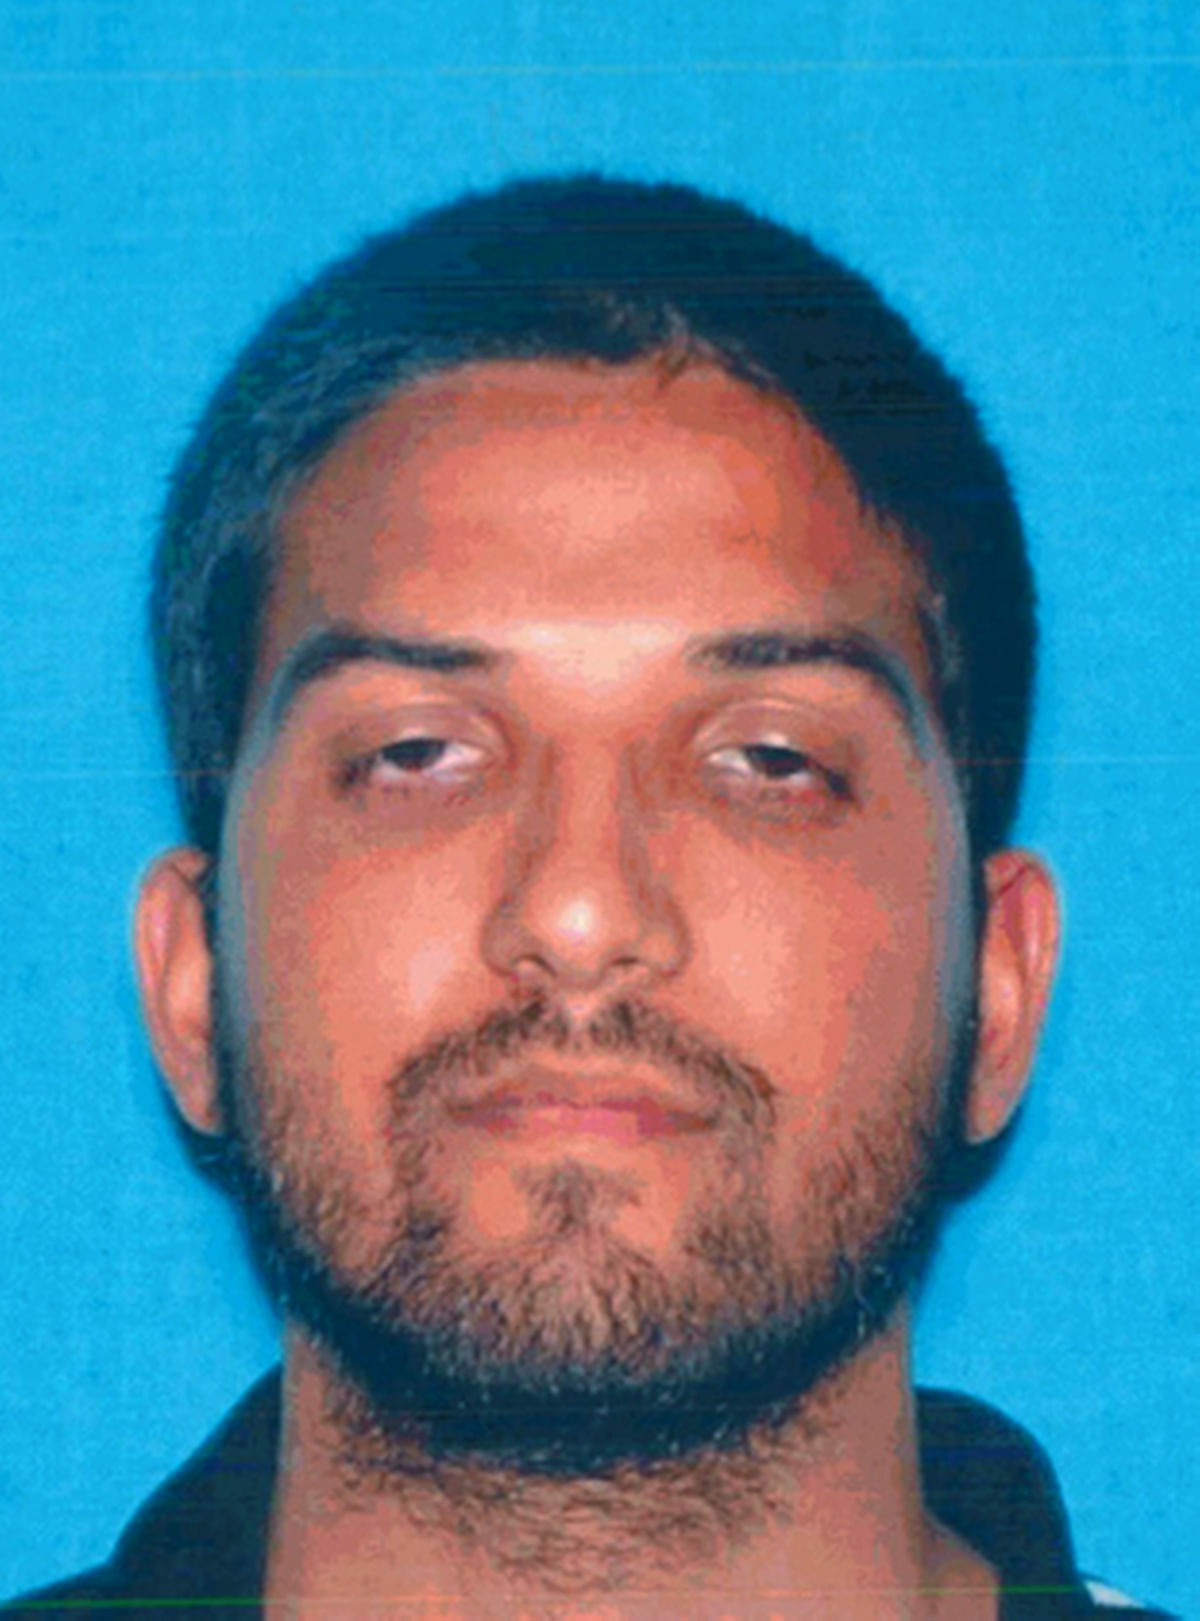 San Bernardino gunman Syed Rizwan Farook had been in contact with known Islamic extremists on social media 